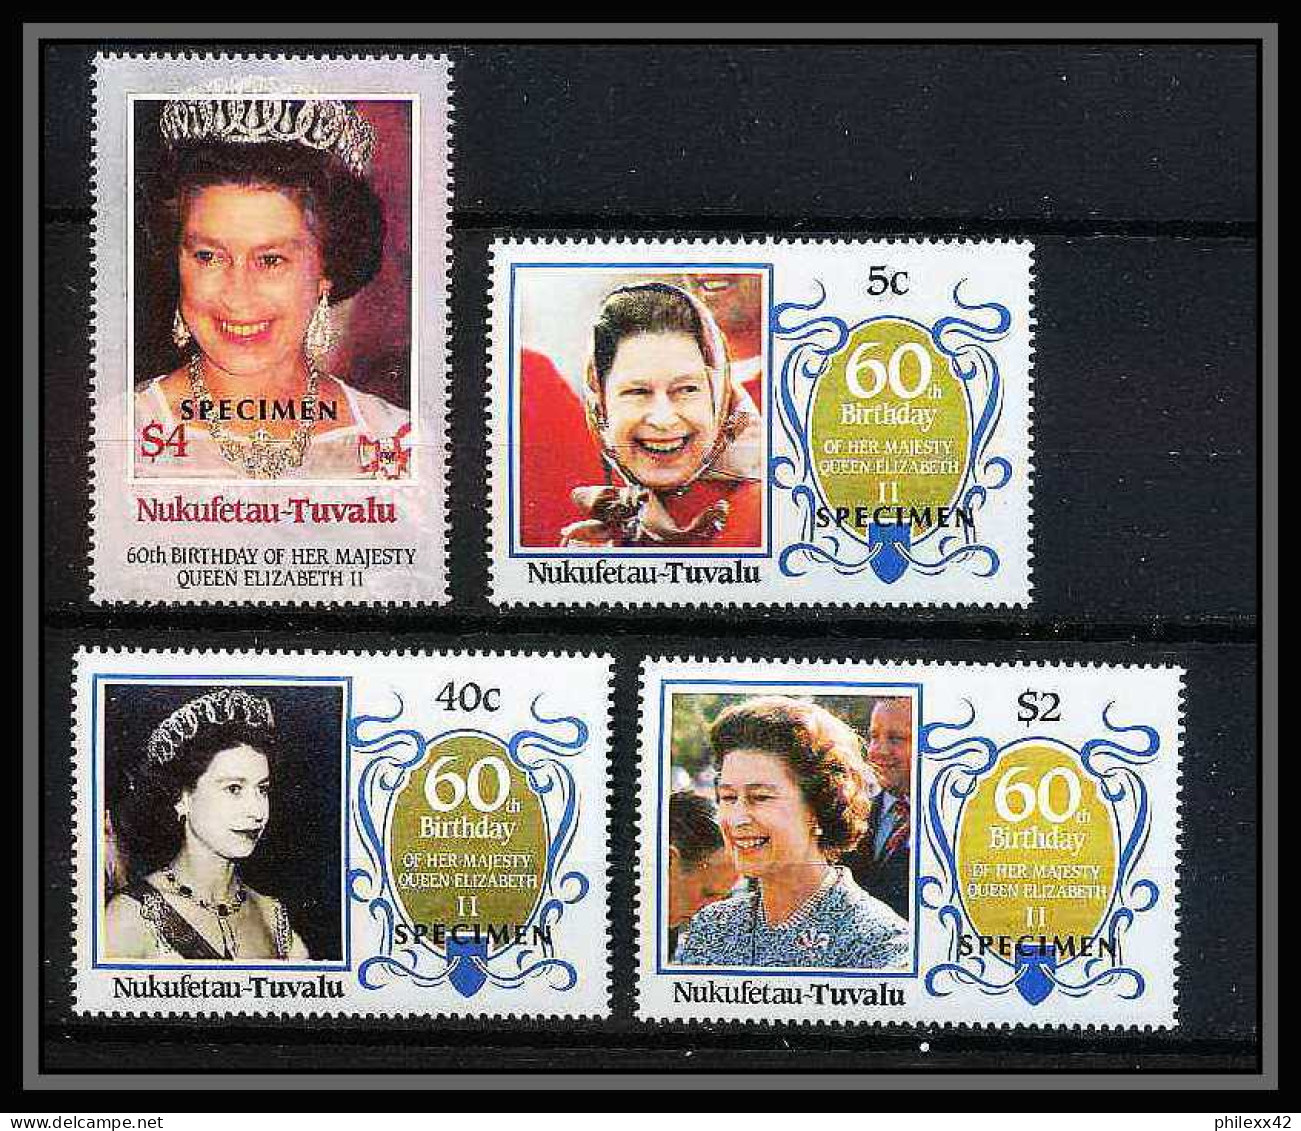 591b Nukufetau Tuvalu MNH ** 1985 SC 51-55 MI 55-62 Bloc 4 Elizabeth Queen Mother Overprint Specimen Proof - Tuvalu